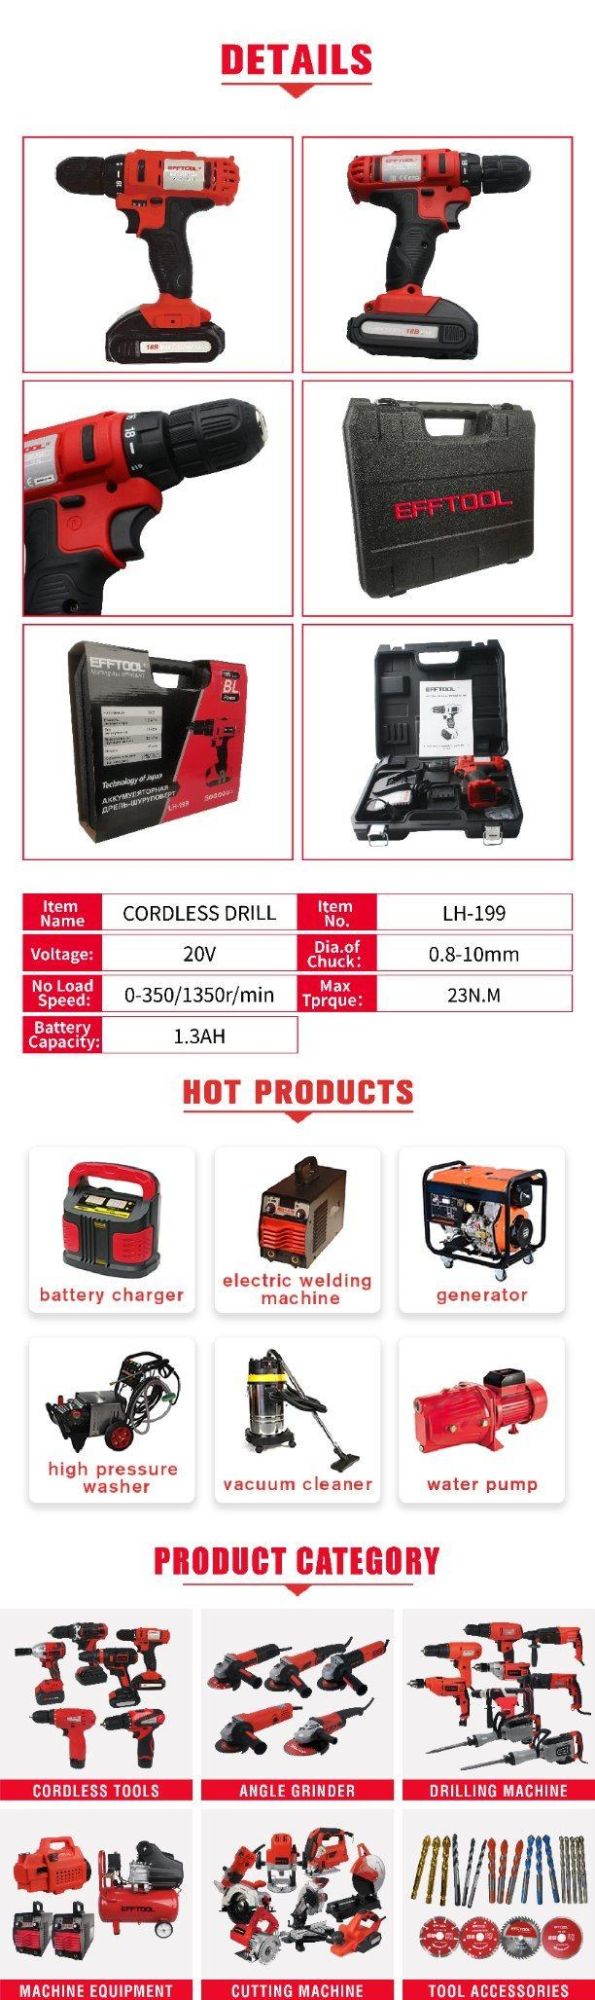 Efftool Hot Selling 18V Li-ion Battery High Quality Cordless Drill Lh-199